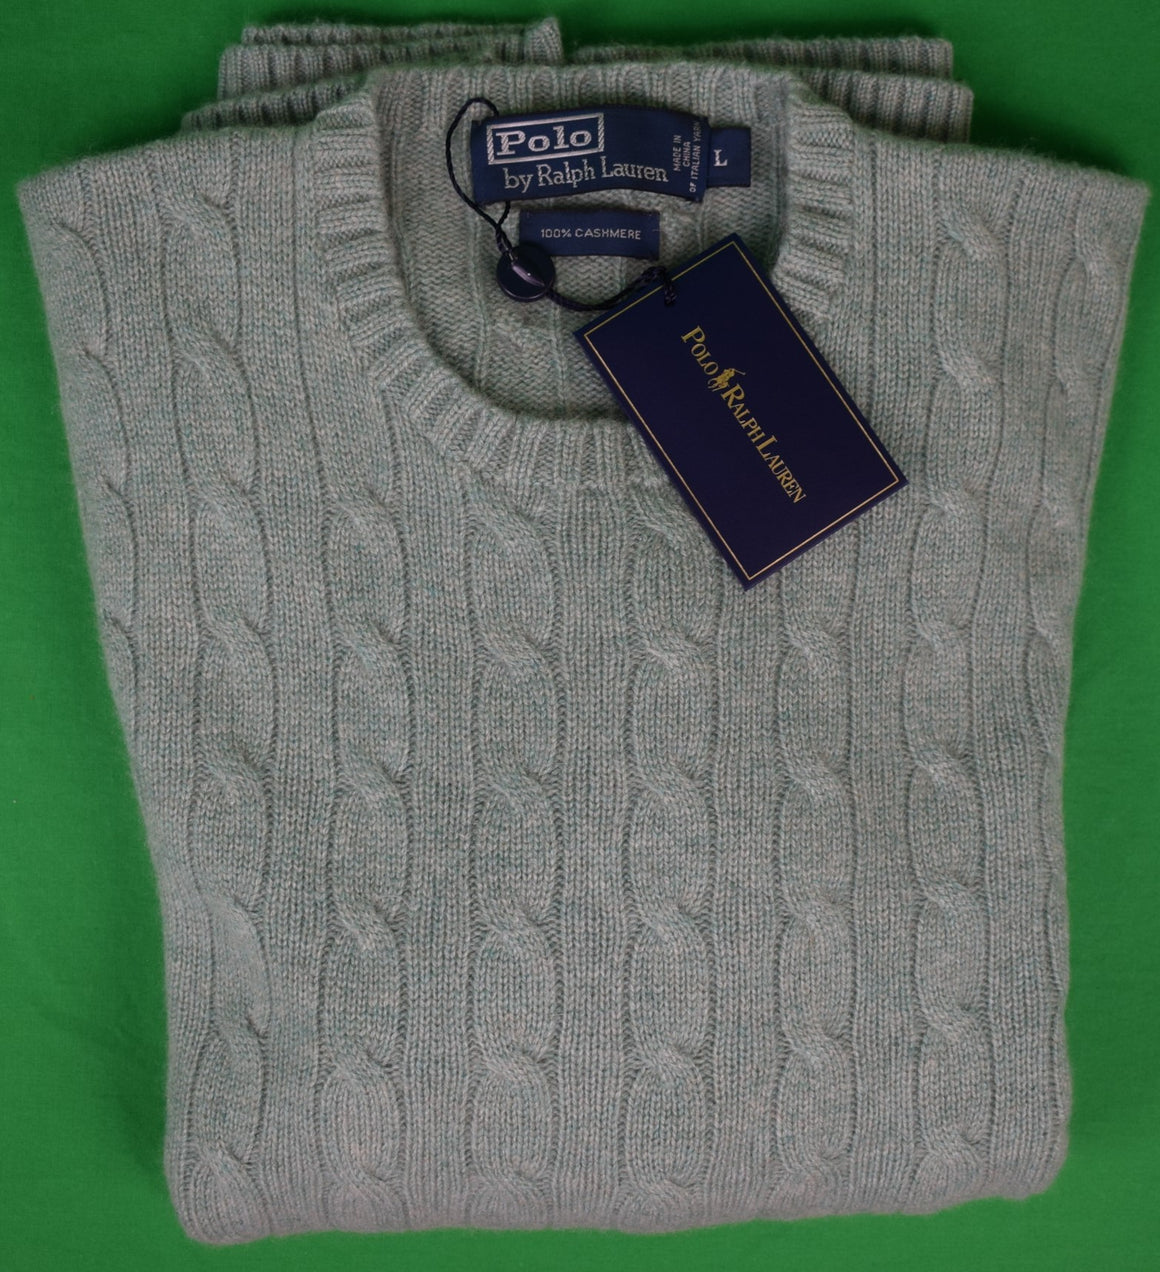 Polo Ralph Lauren Seafoam Green Cashmere Cable Crewneck Sweater Sz L (New w/ PRL Tag)